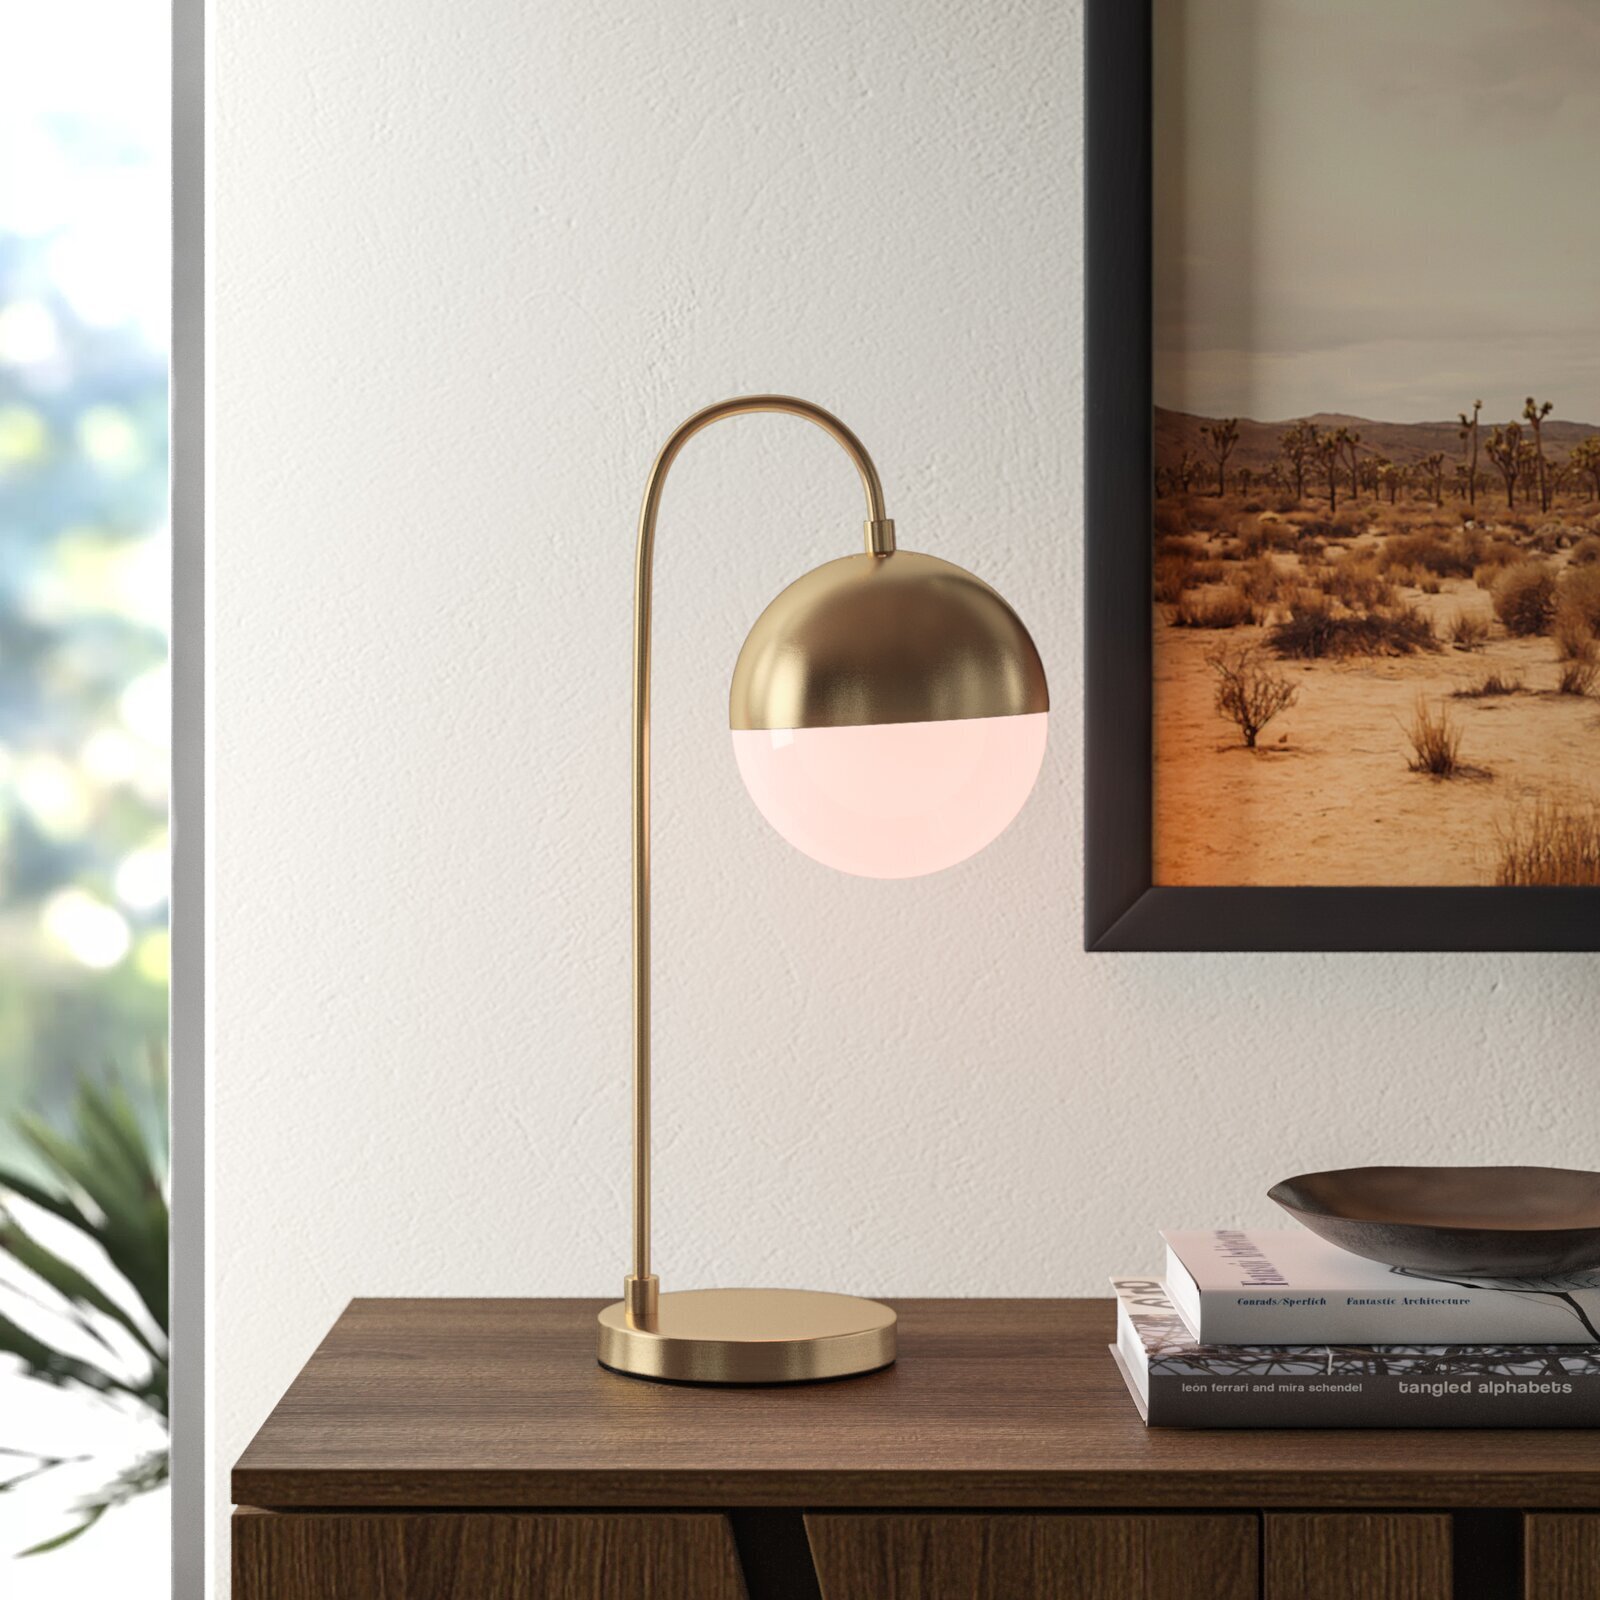 Orb Style Lamp Shade